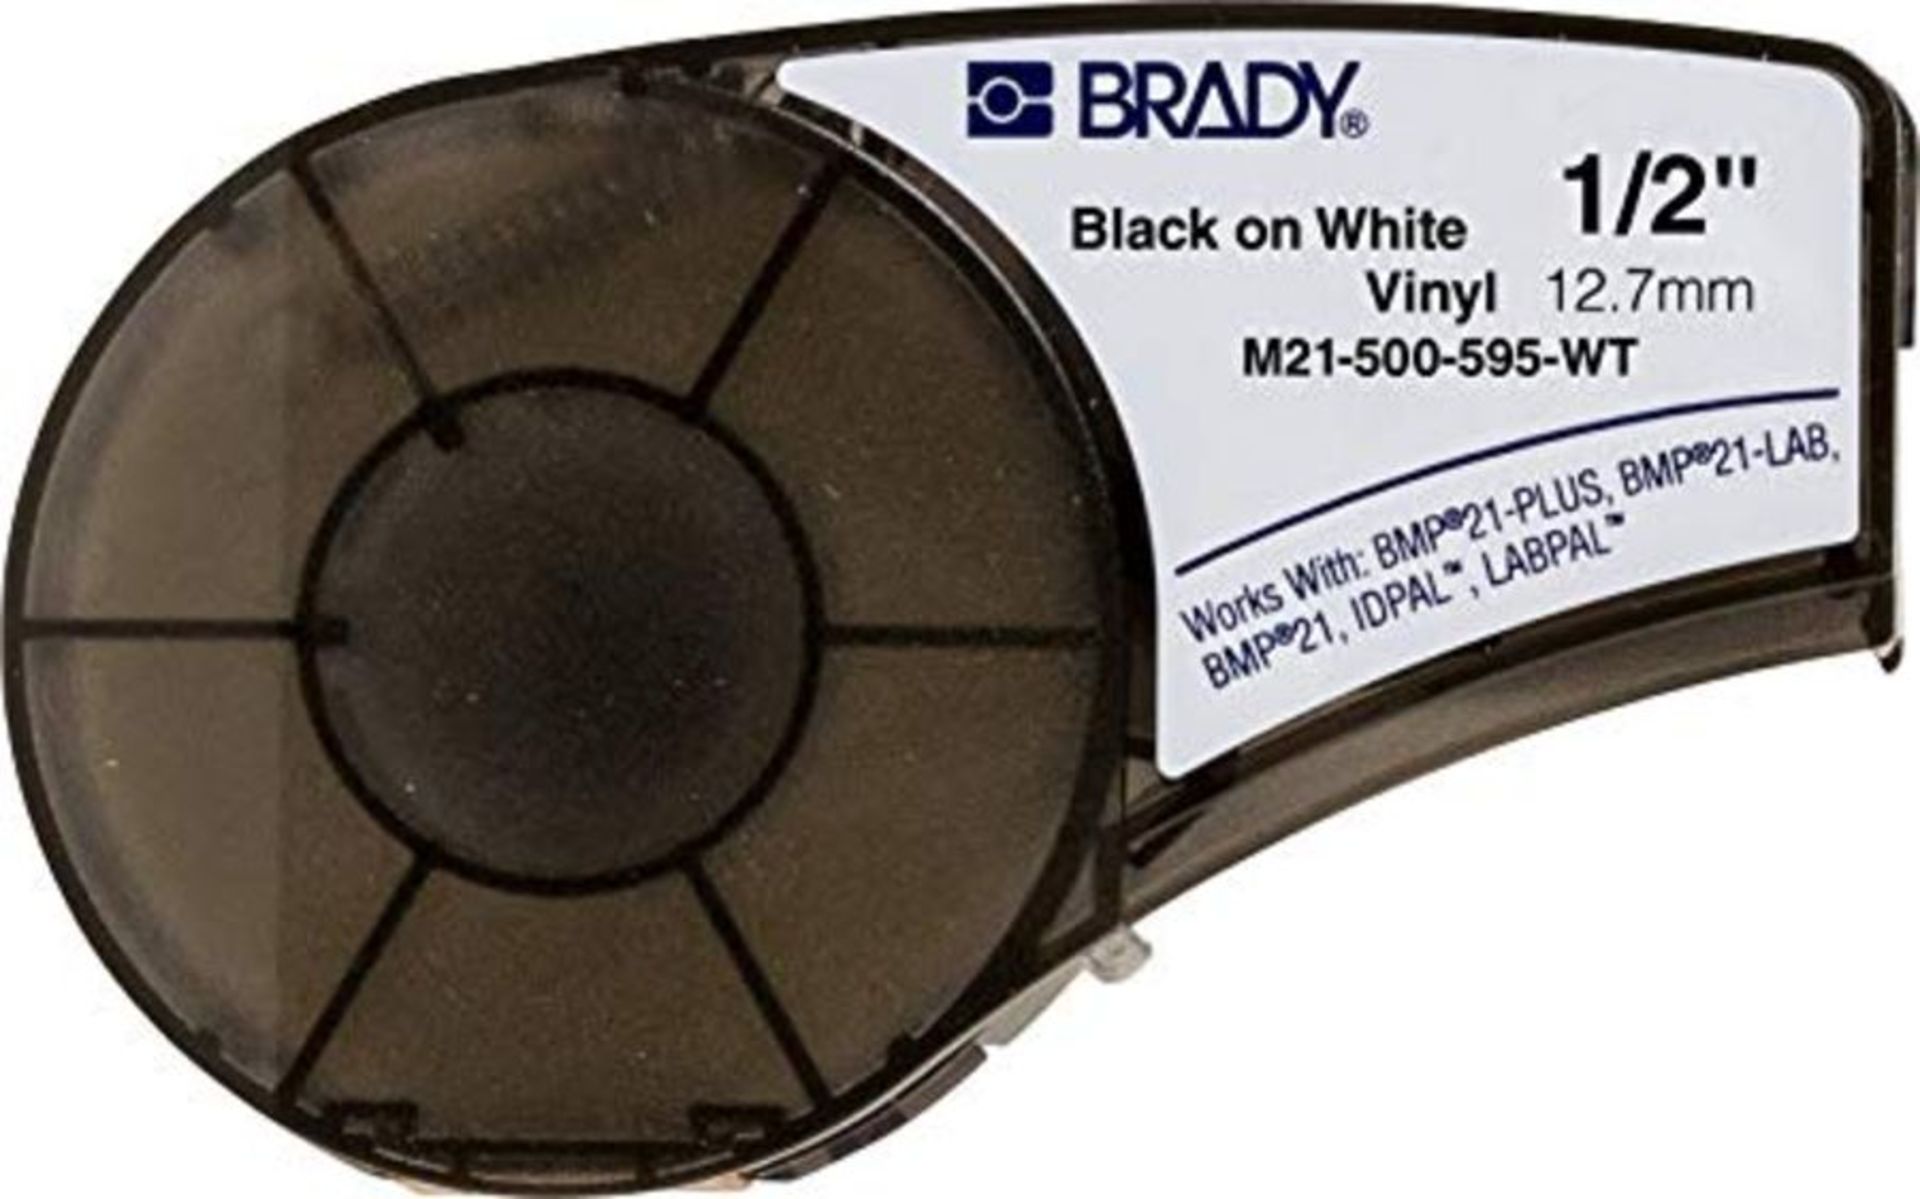 Brady High Adhesion Vinyl Label Tape (M21-500-595-WT) - Black on White Vinyl Film - Co